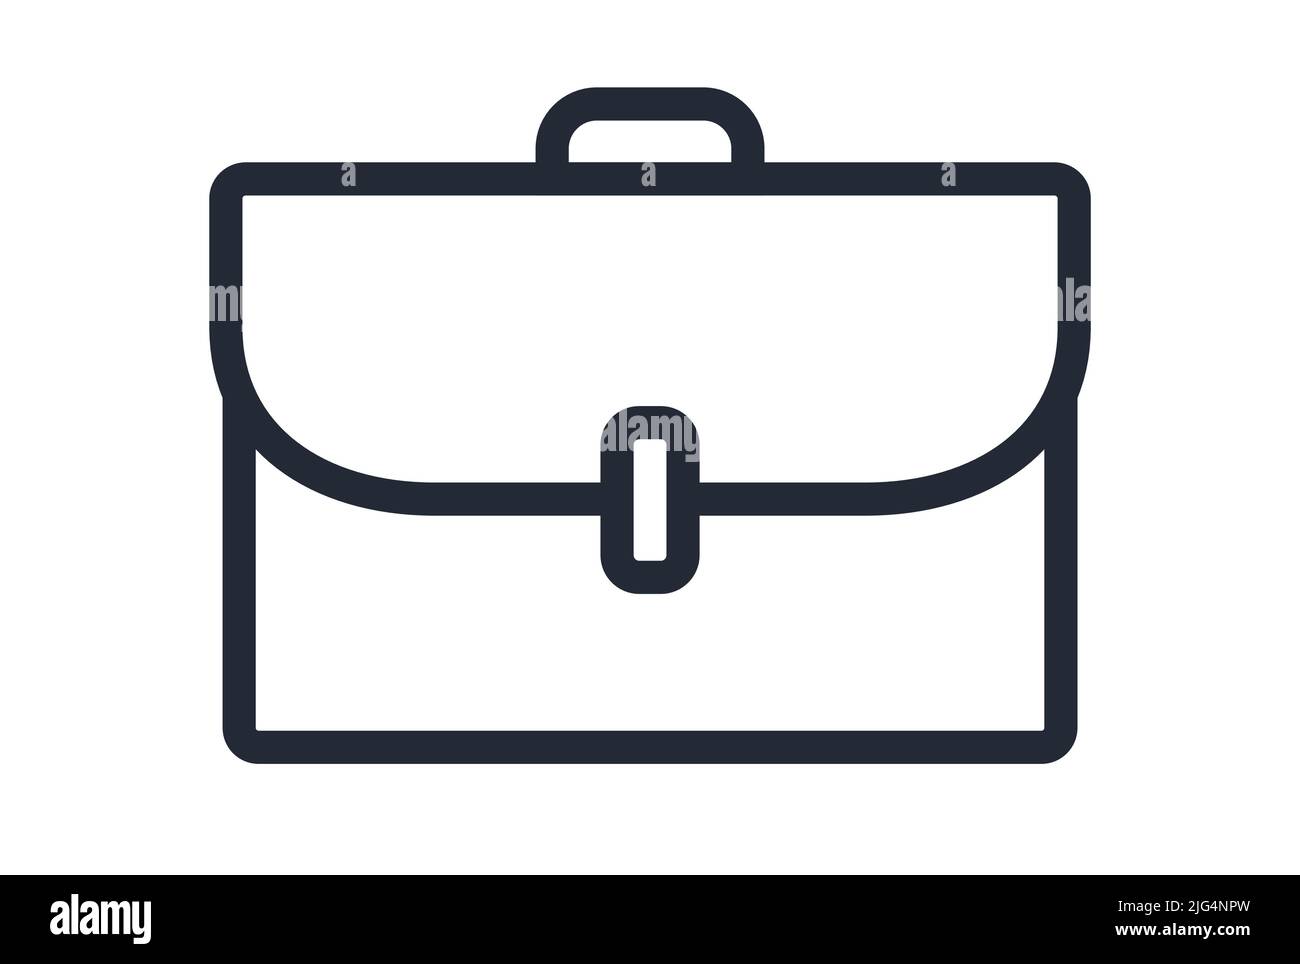 Briefcase office bag or attache case symbol vector illustration icon Stock Vector